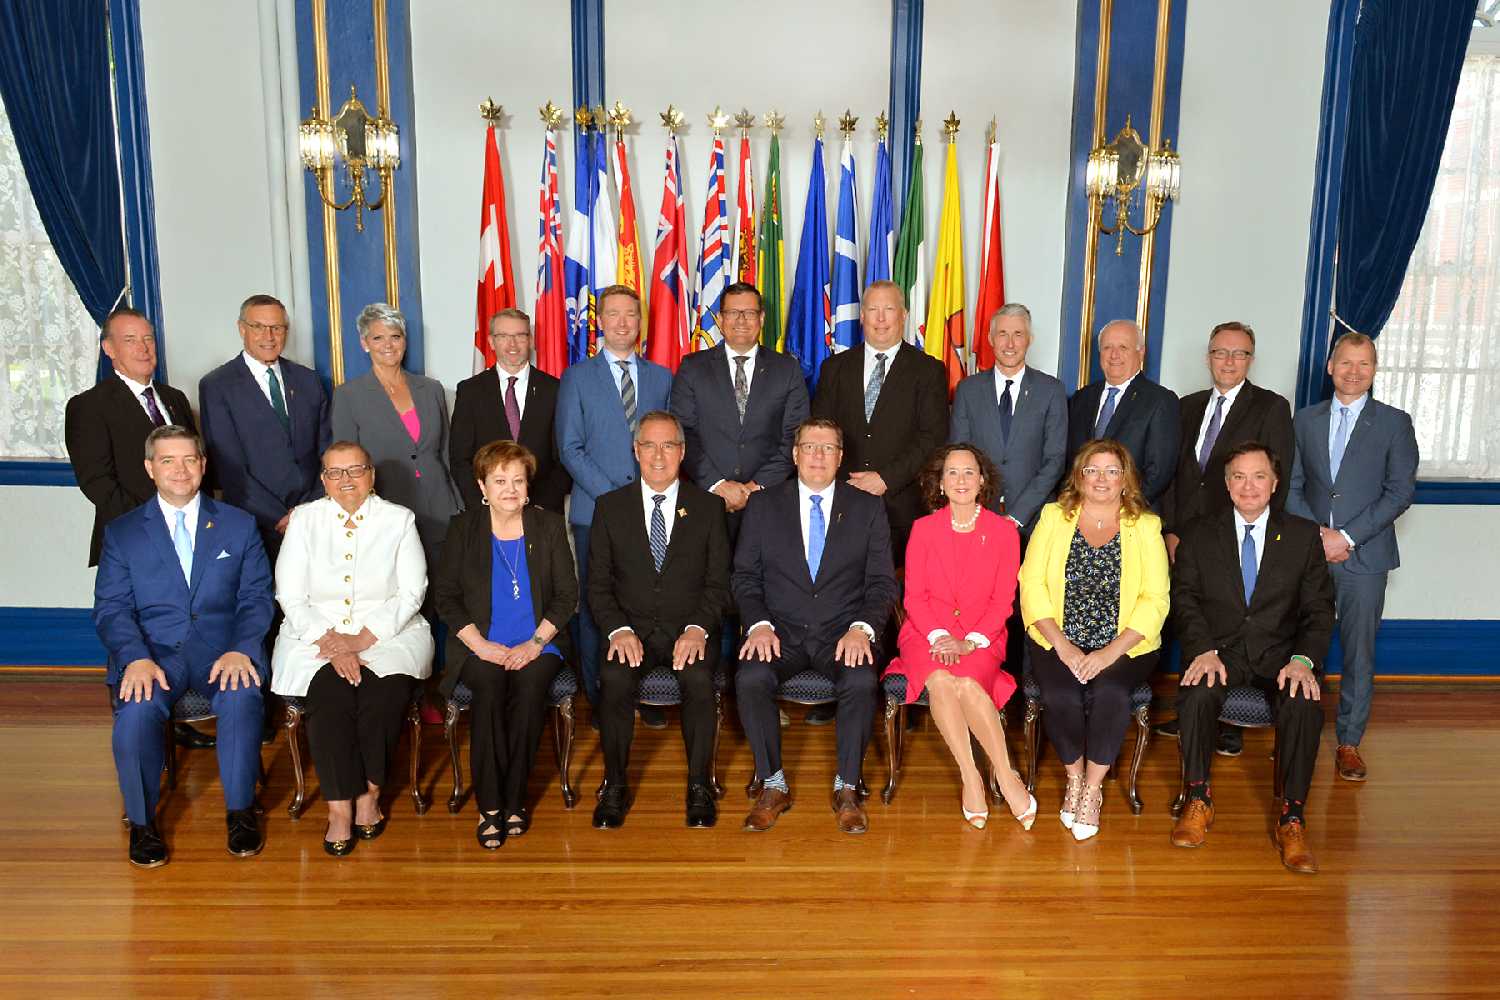 Saskatchewan's new cabinet, sworn in Tuesday, May 31